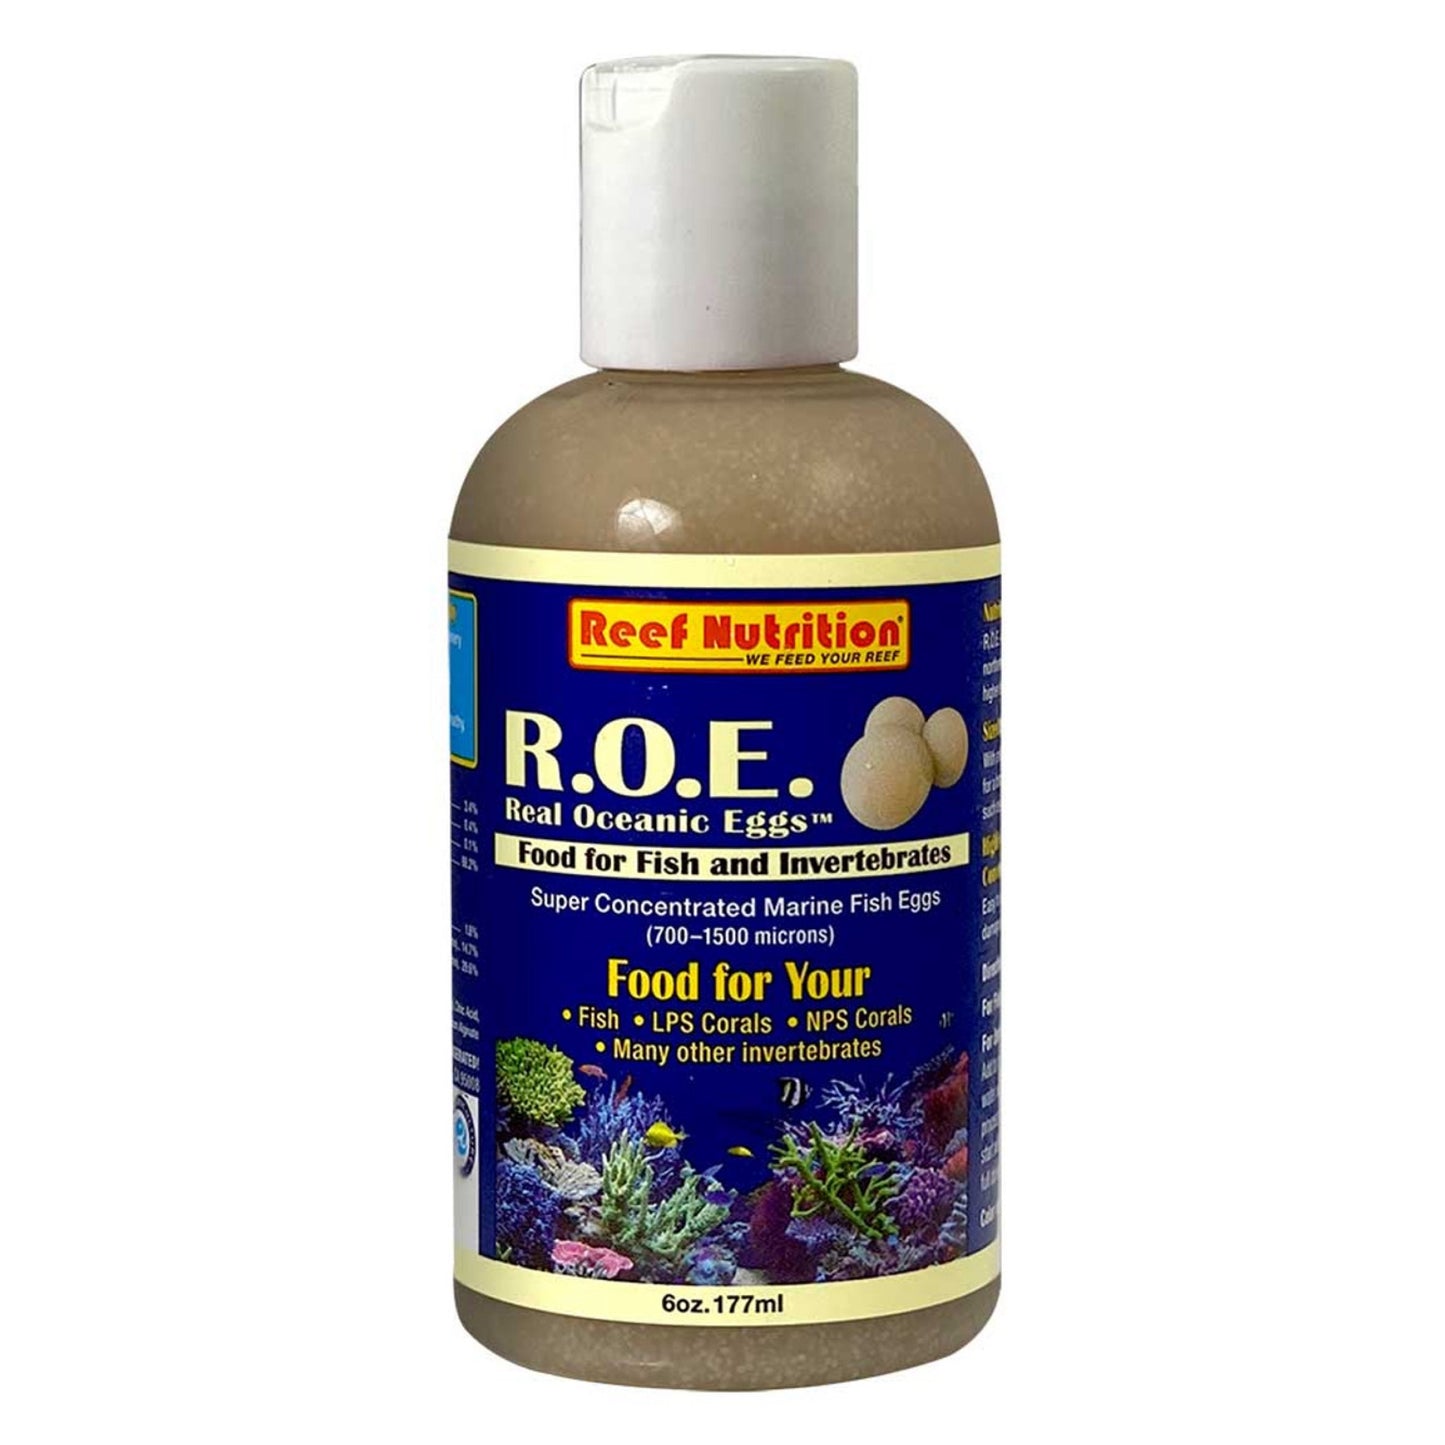 Reef Nutrition R.O.E. - Real Oceanic Eggs